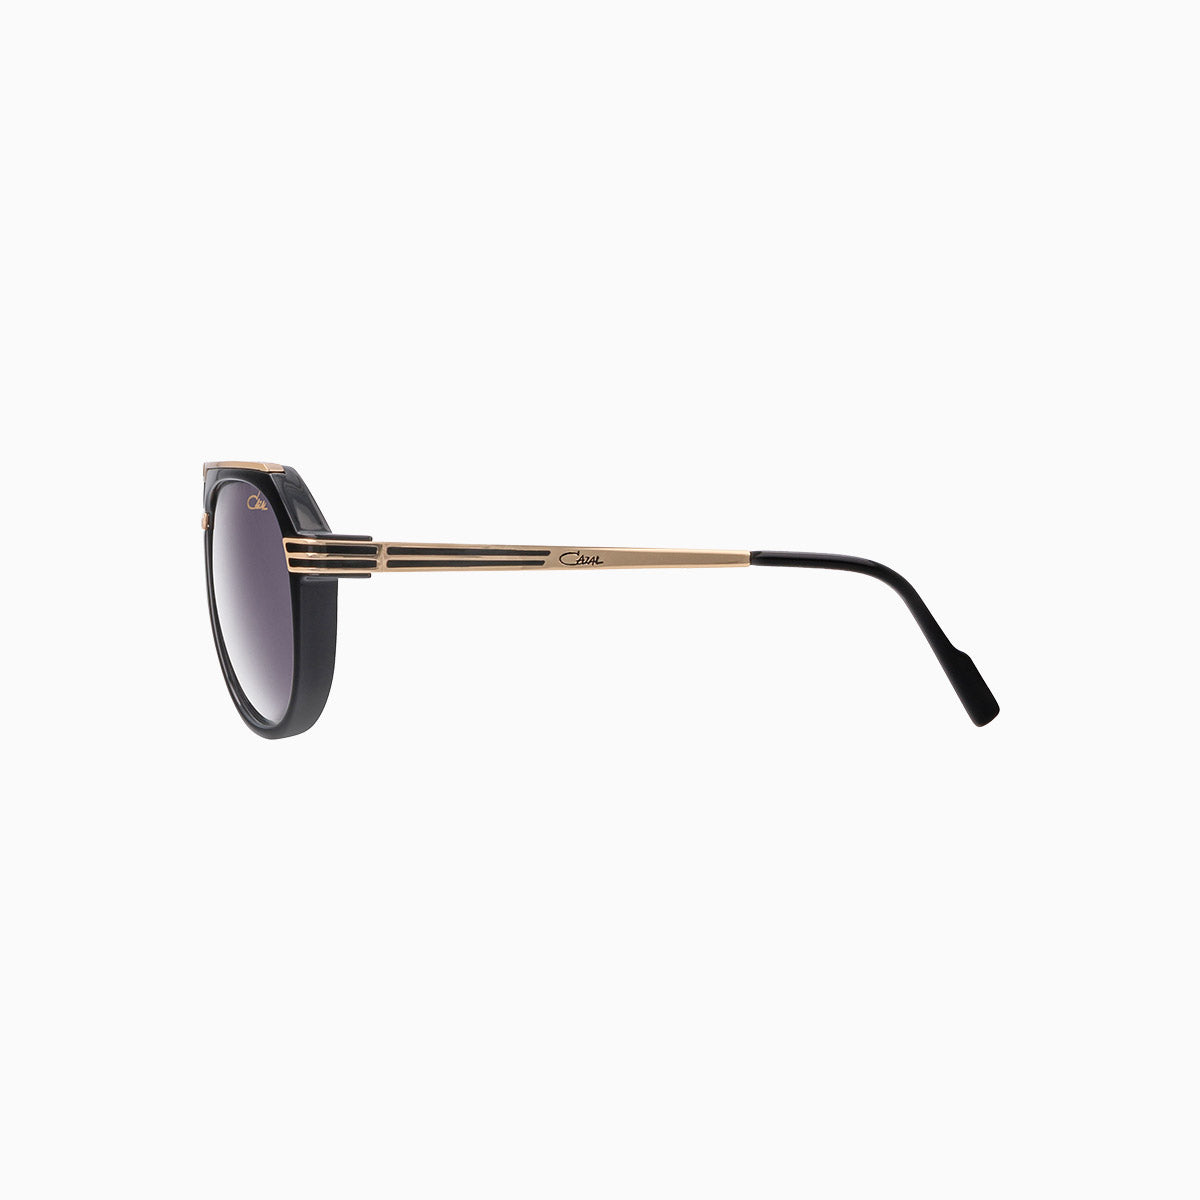 mens-cazal-674-black-gold-sunglasses-674-001